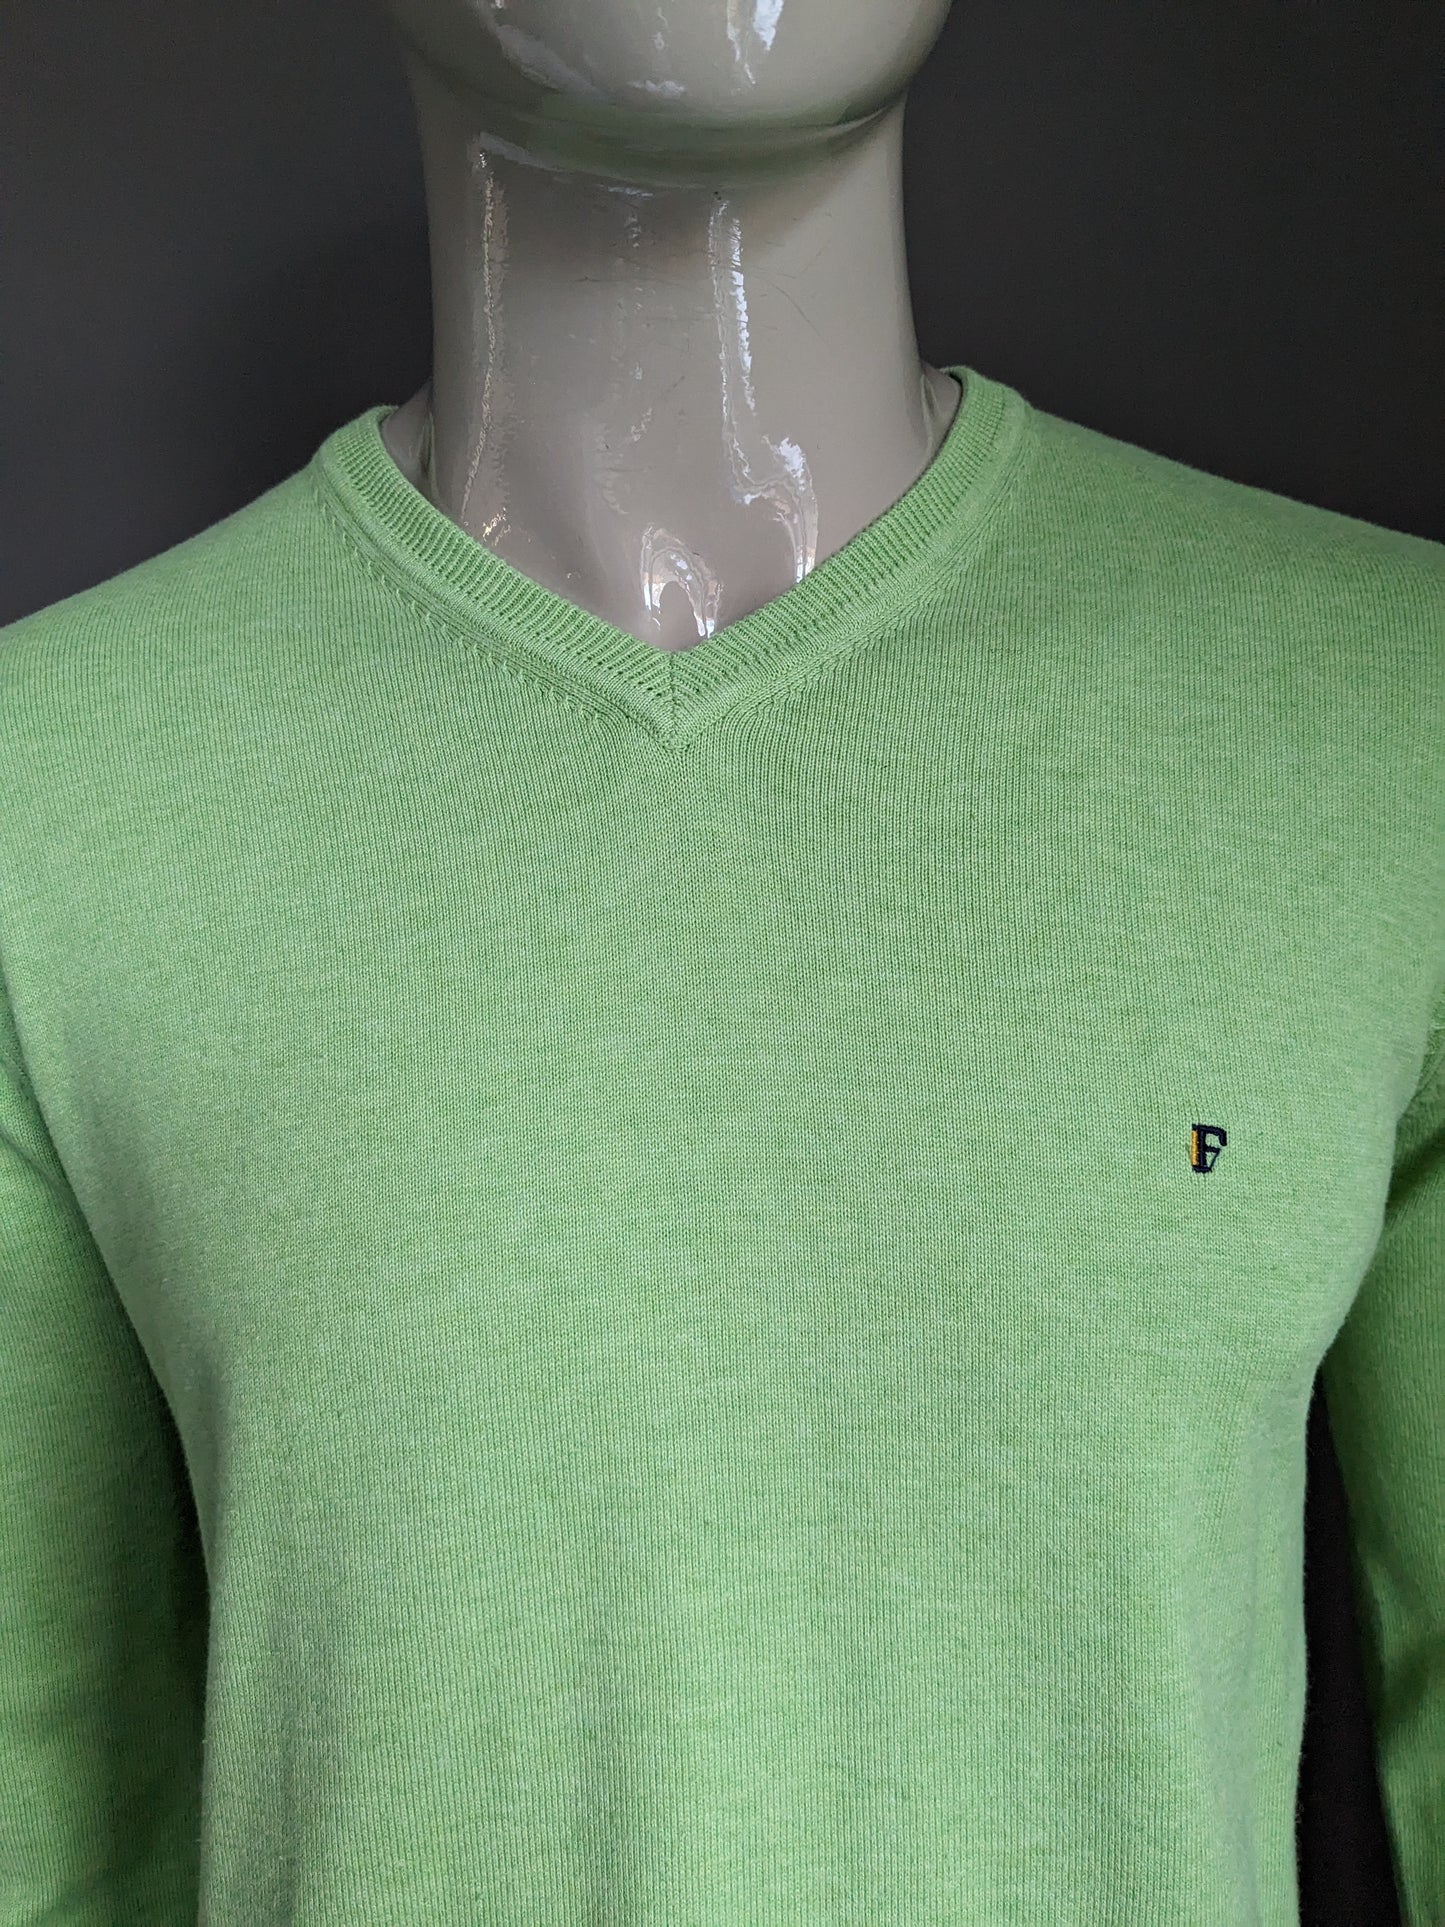 Fellows League of Legends V-neck Sweater. Green. Size M.